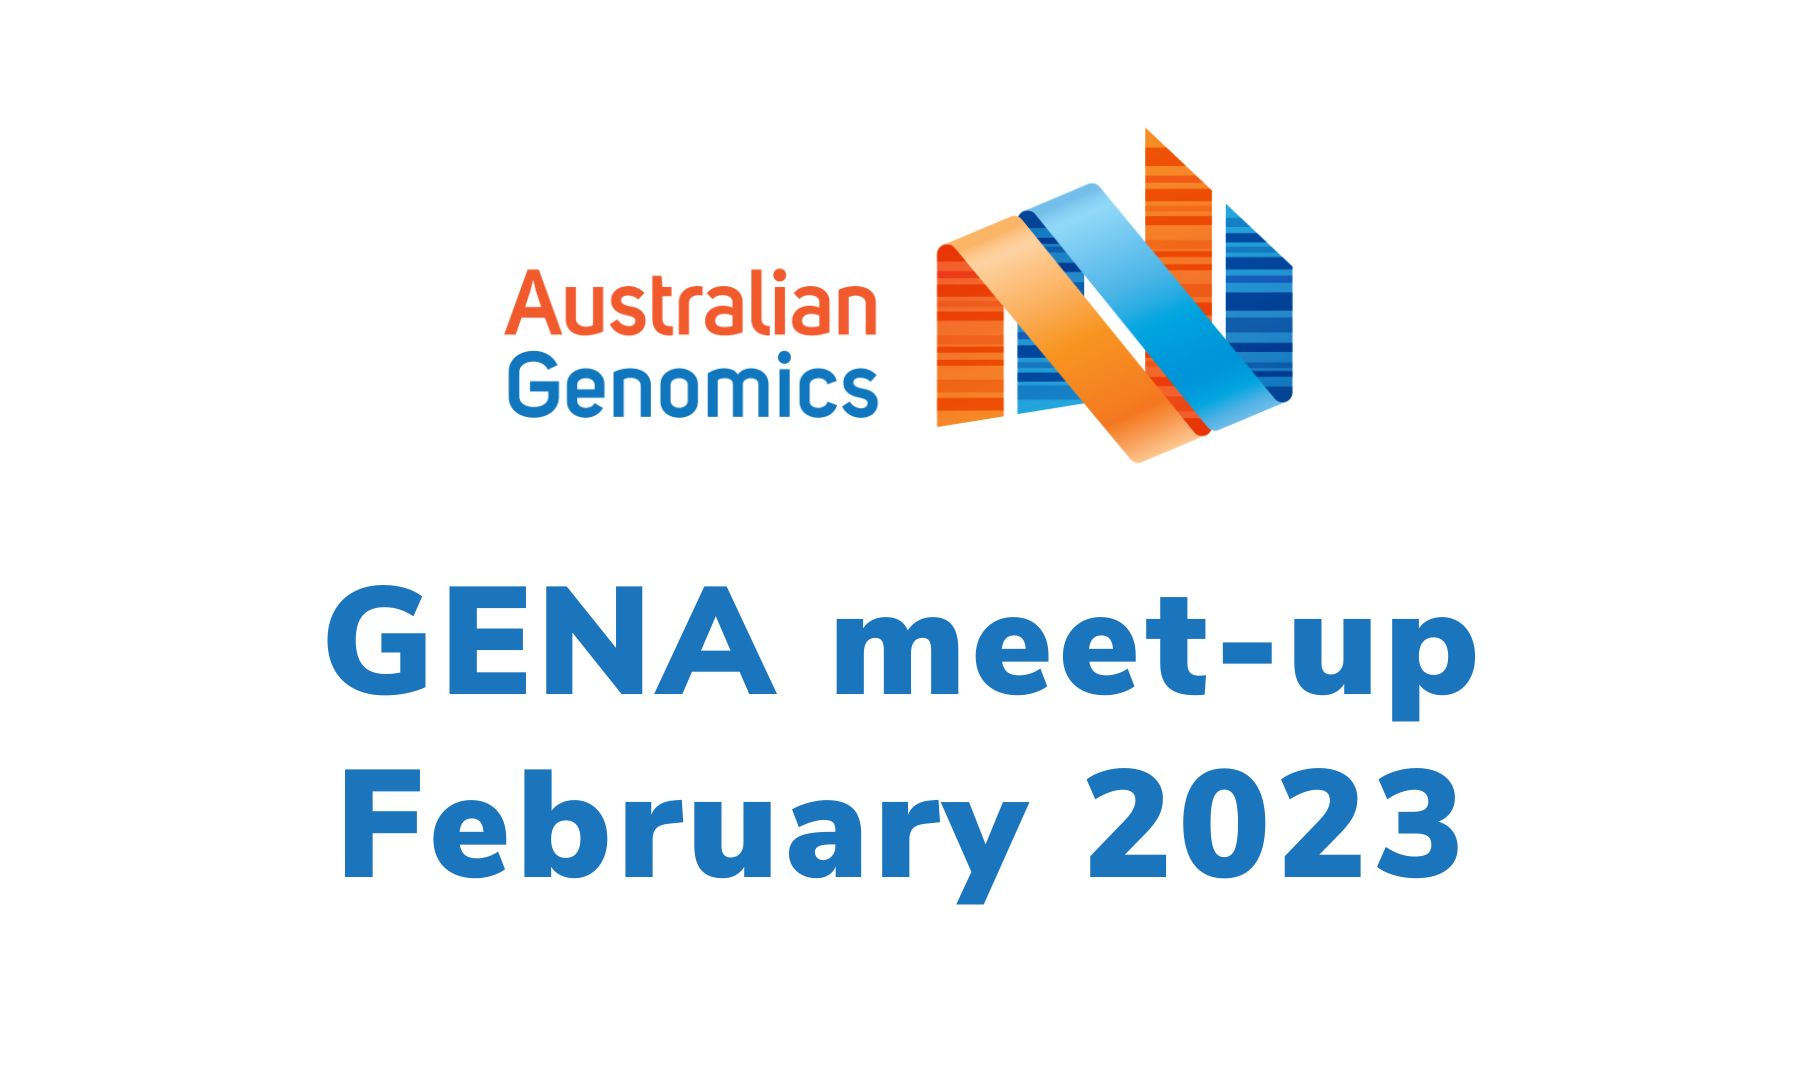 Genomics Education Network Australasia meet-up event on 15 February 2023